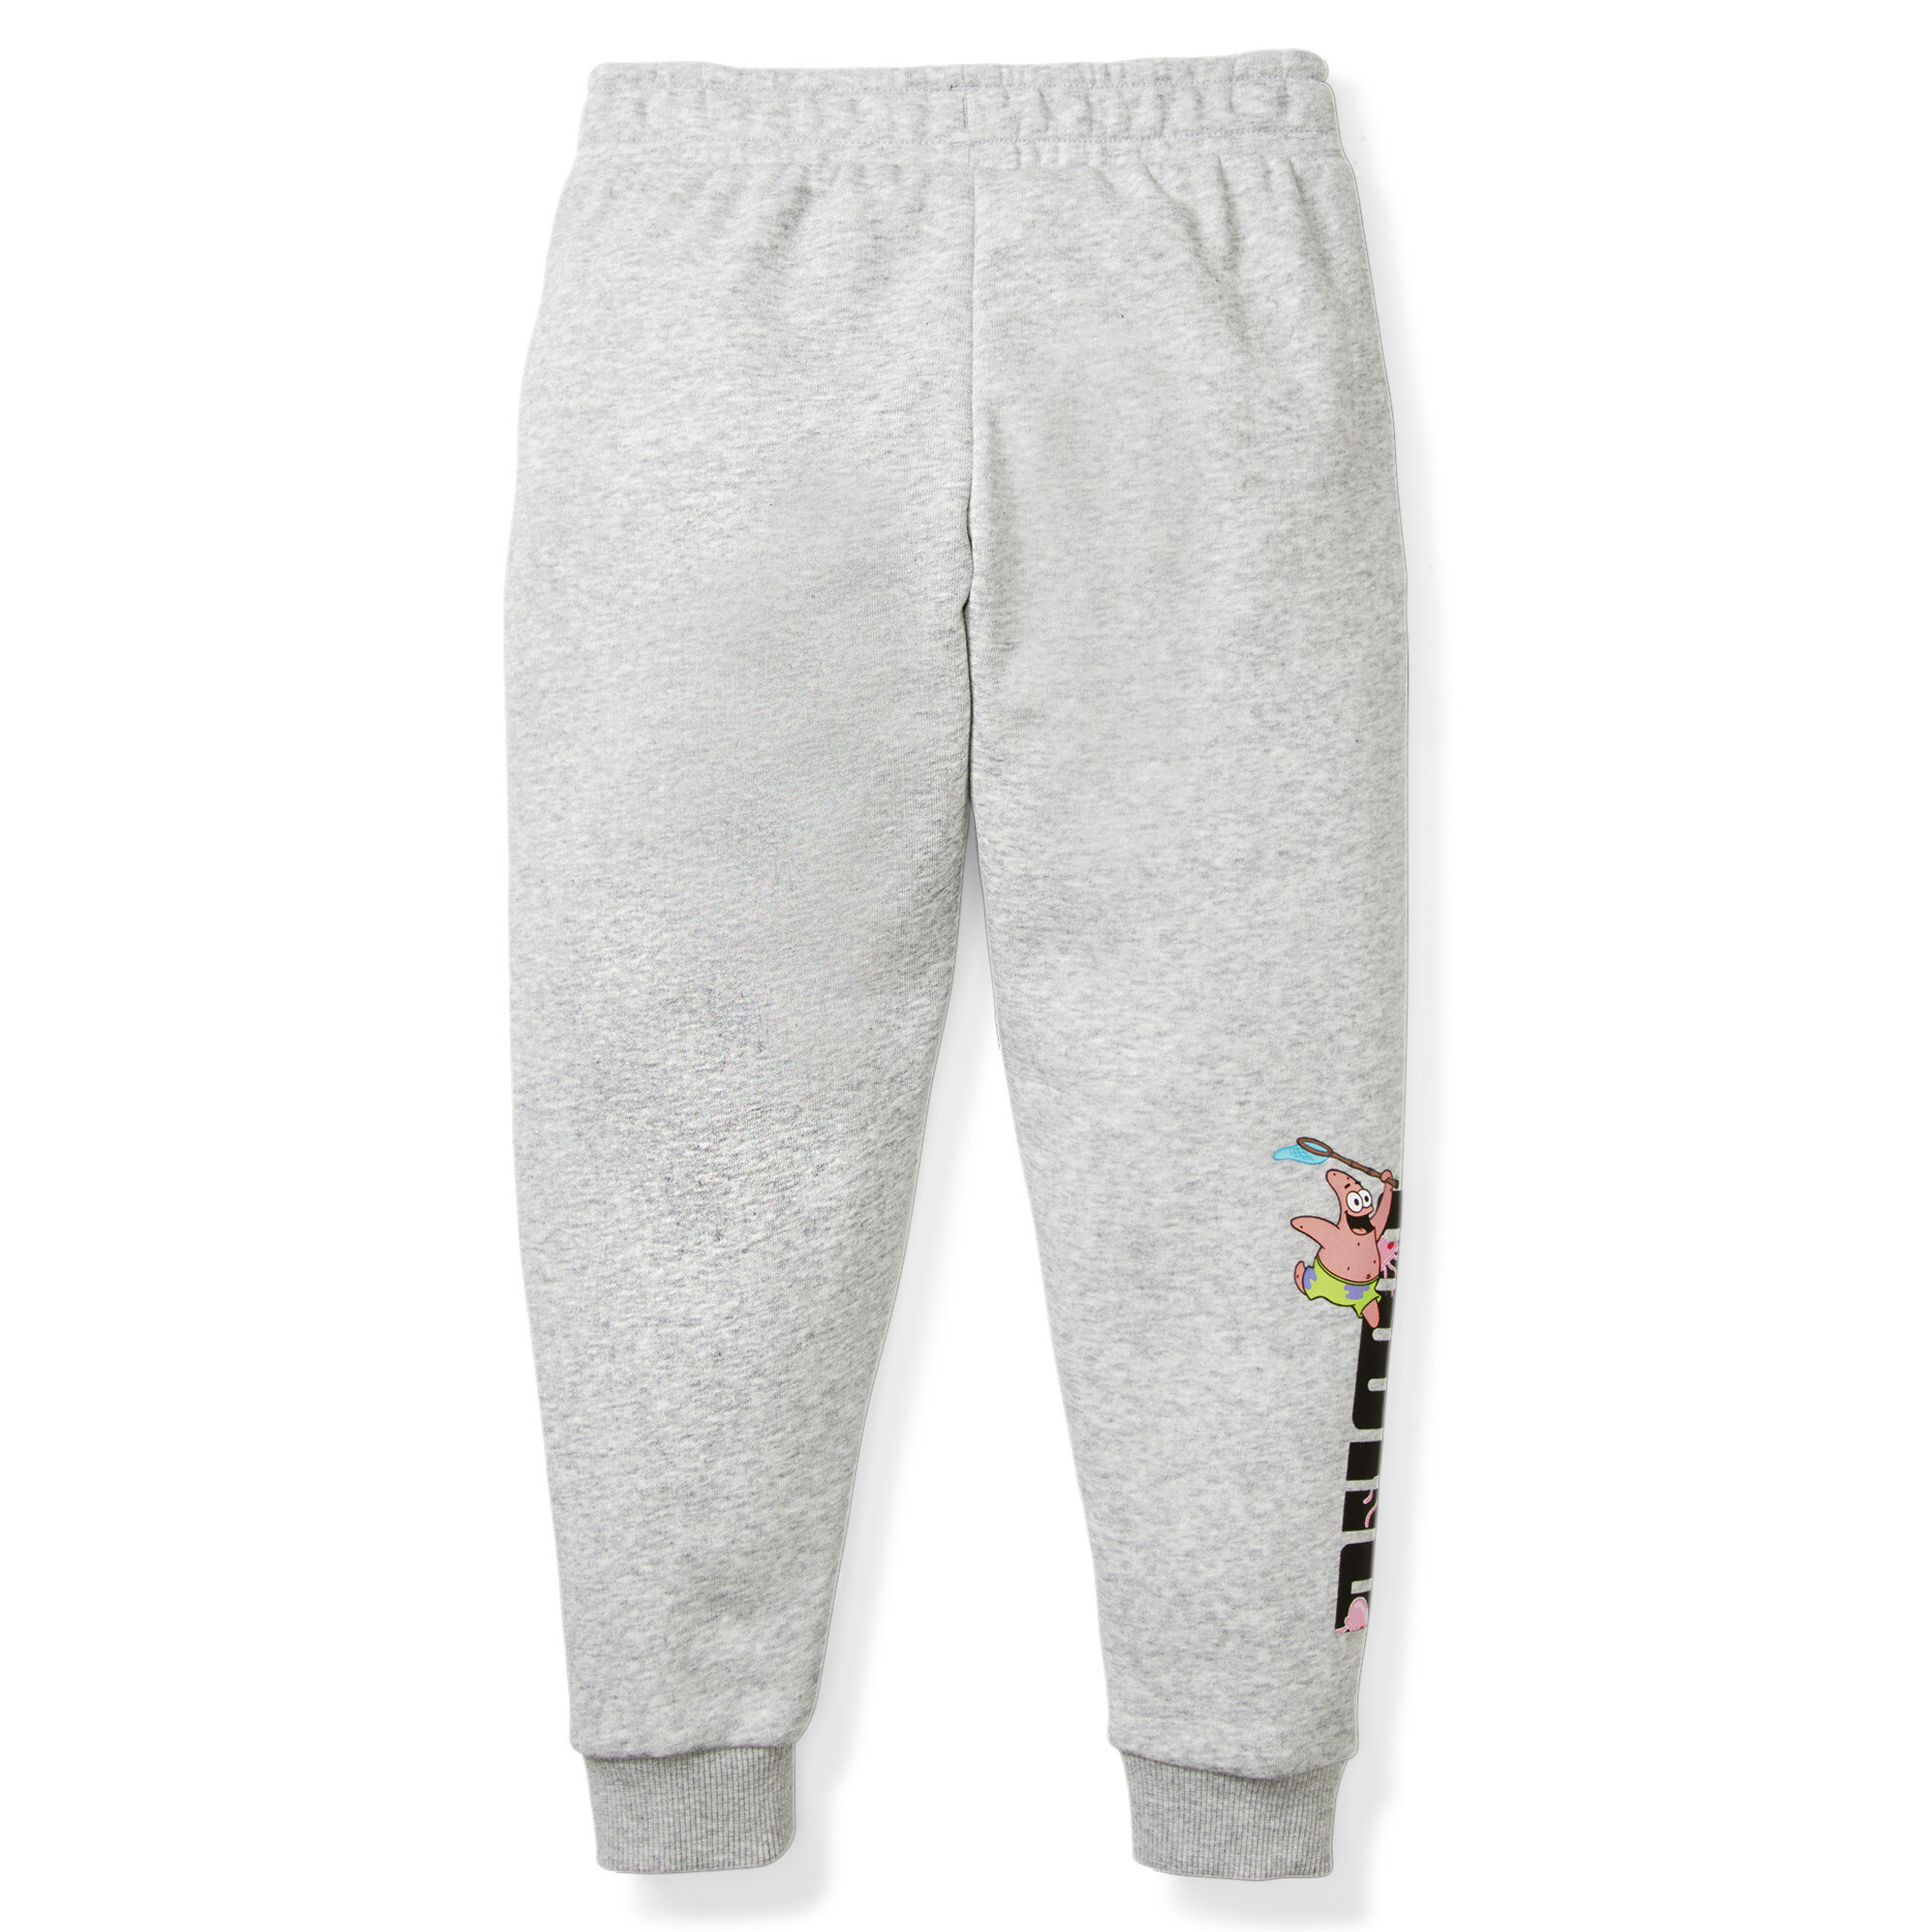 Puma X SPONGEBOB Sweatpants Kids, Gray, Size 3-4Y, Clothing